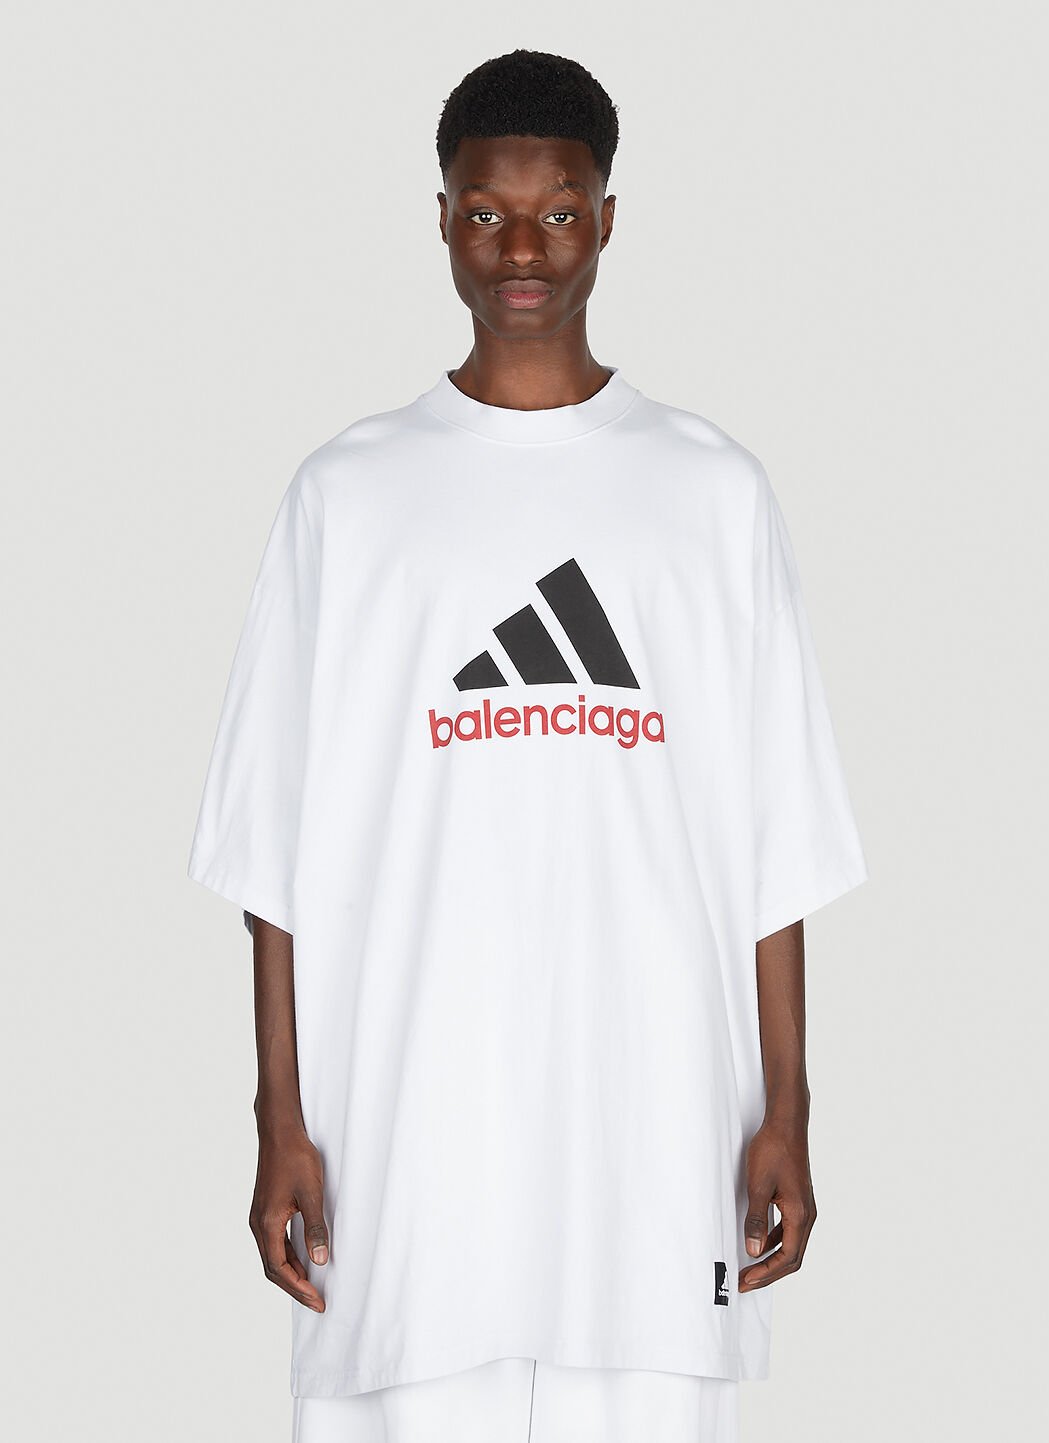 Balenciaga x adidas Logo Print T-Shirt Red axb0151003